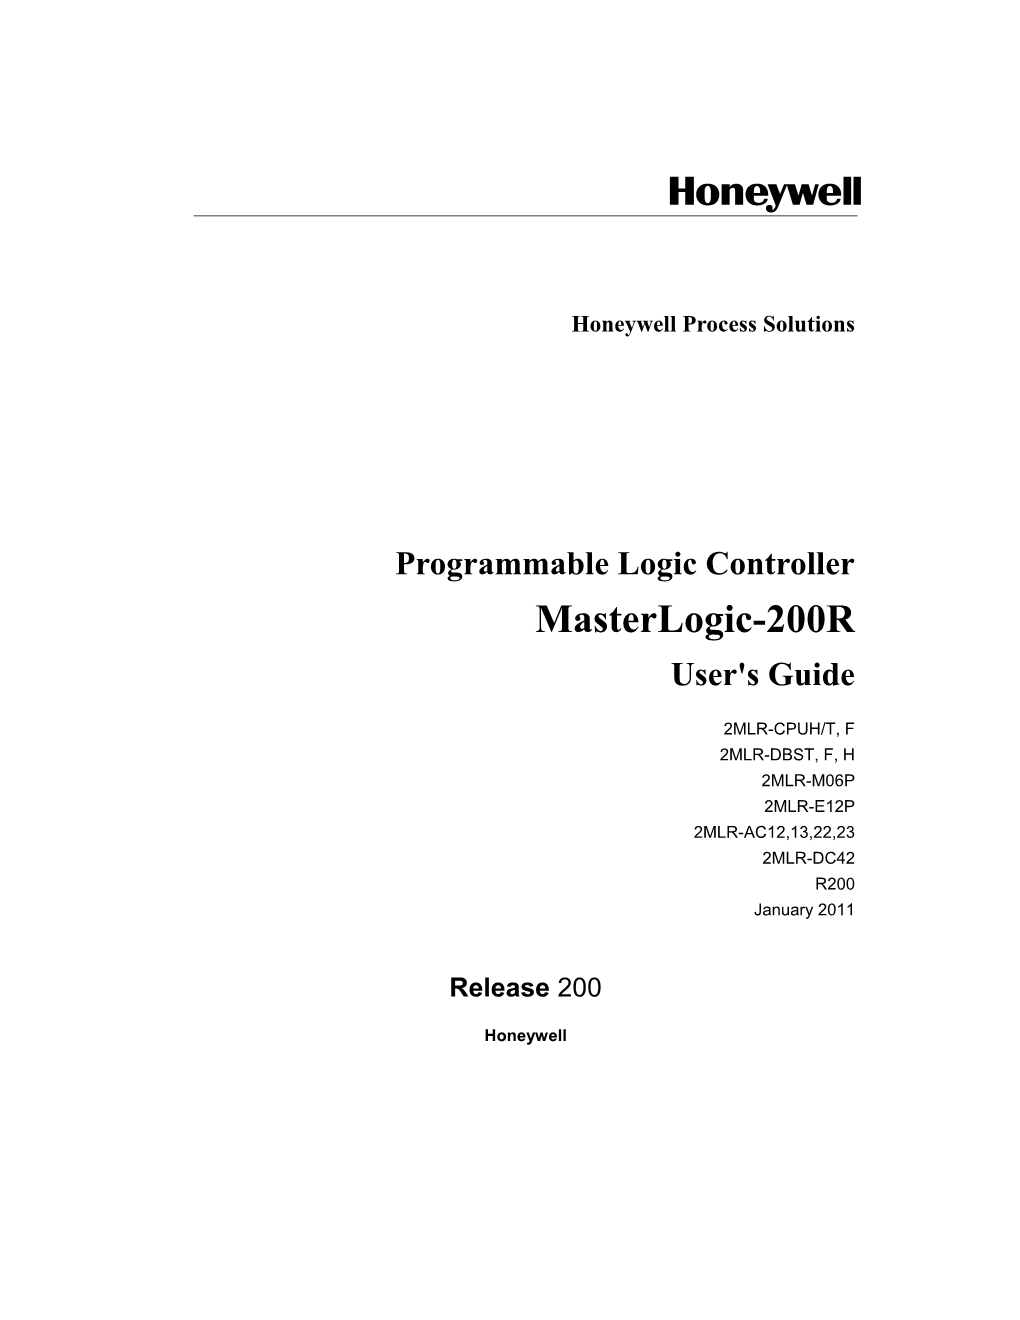 Programmable Logic Controller Masterlogic-200R User's Guide